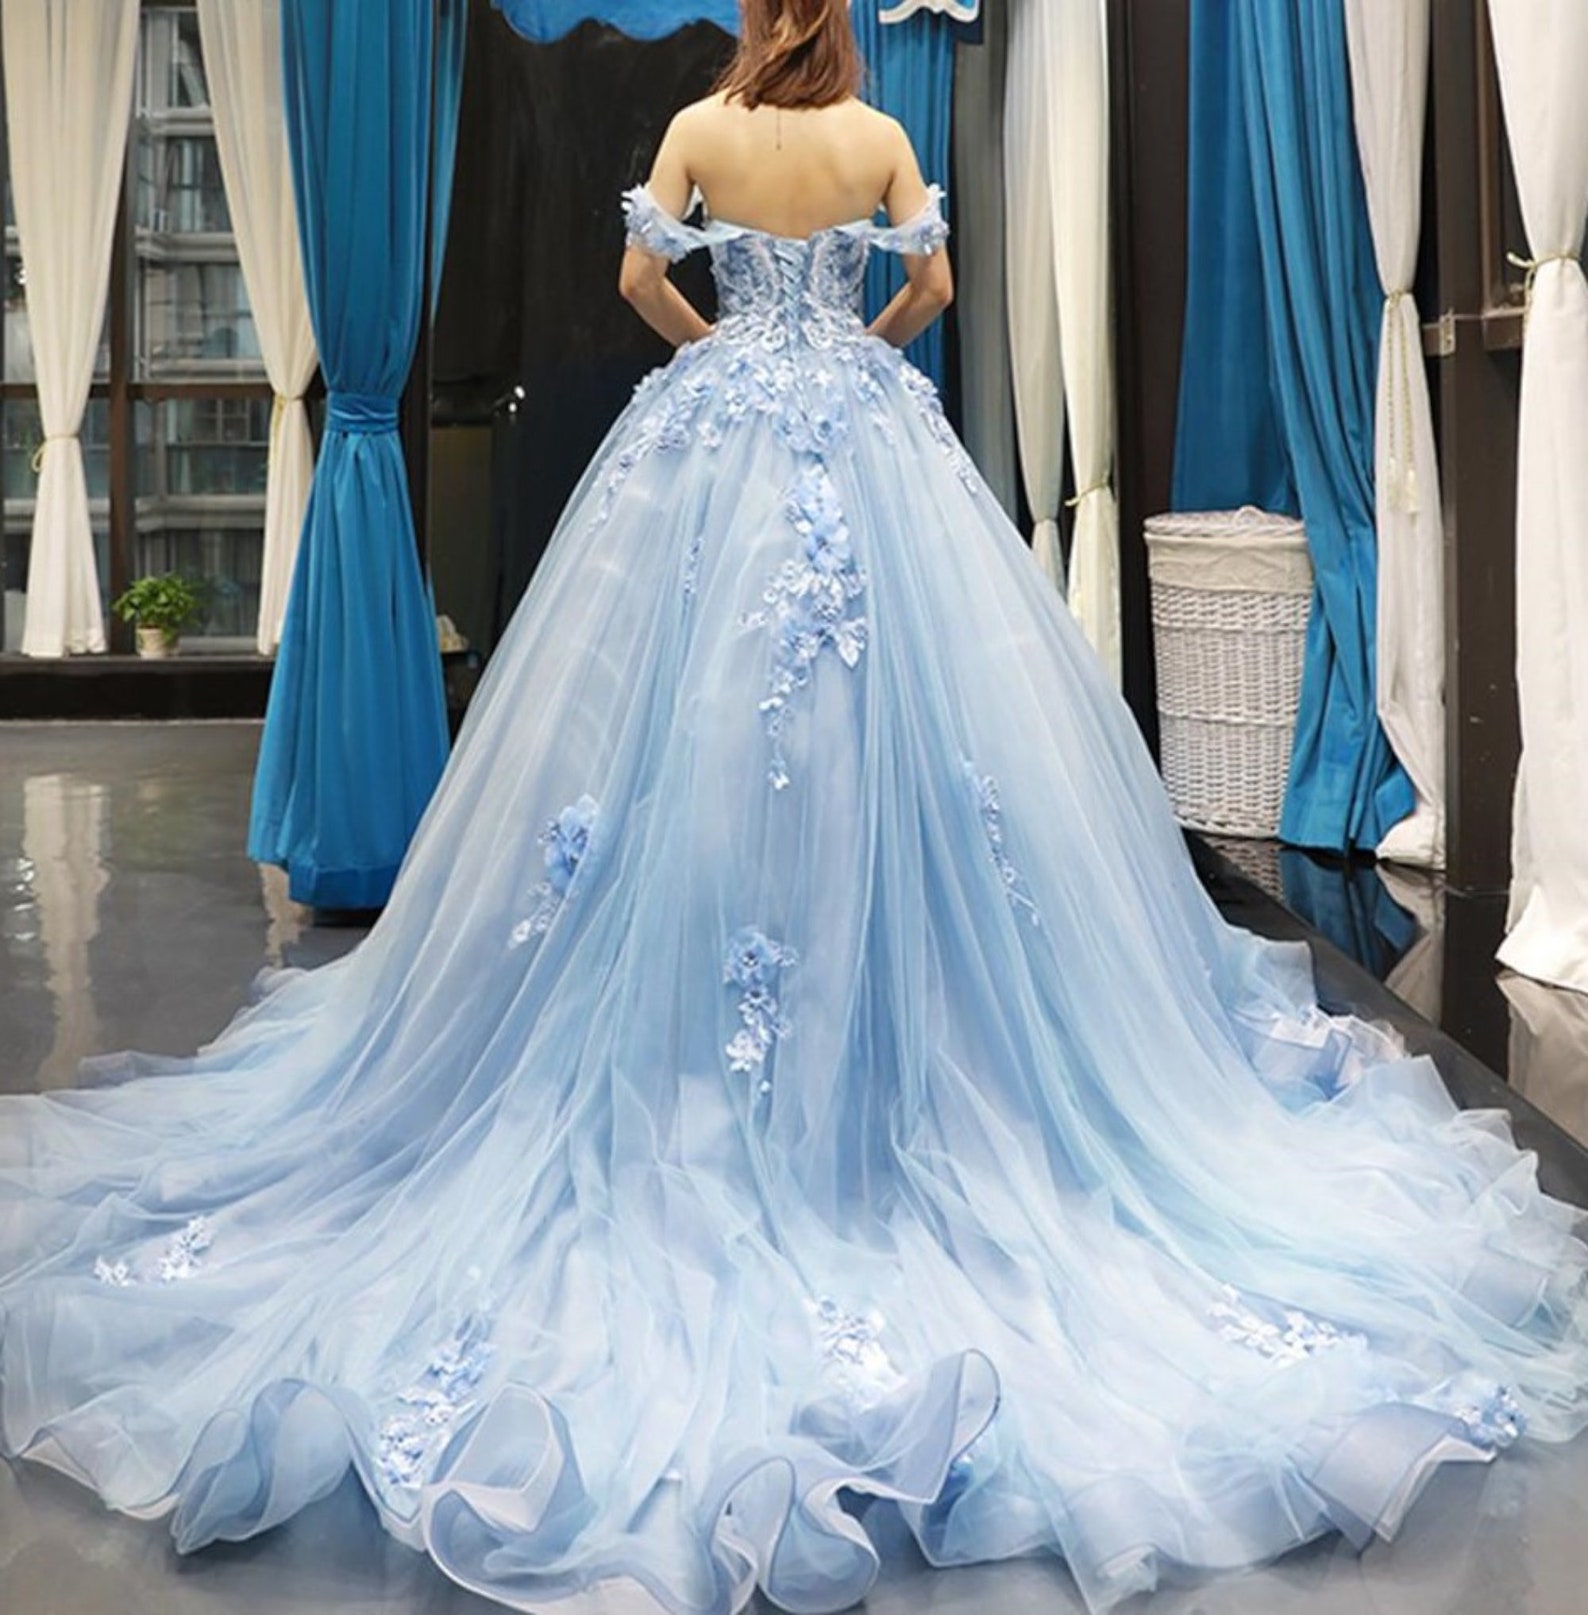 Stunning Light Blue & White Cinderella Ball Gown Wedding Dress - Etsy